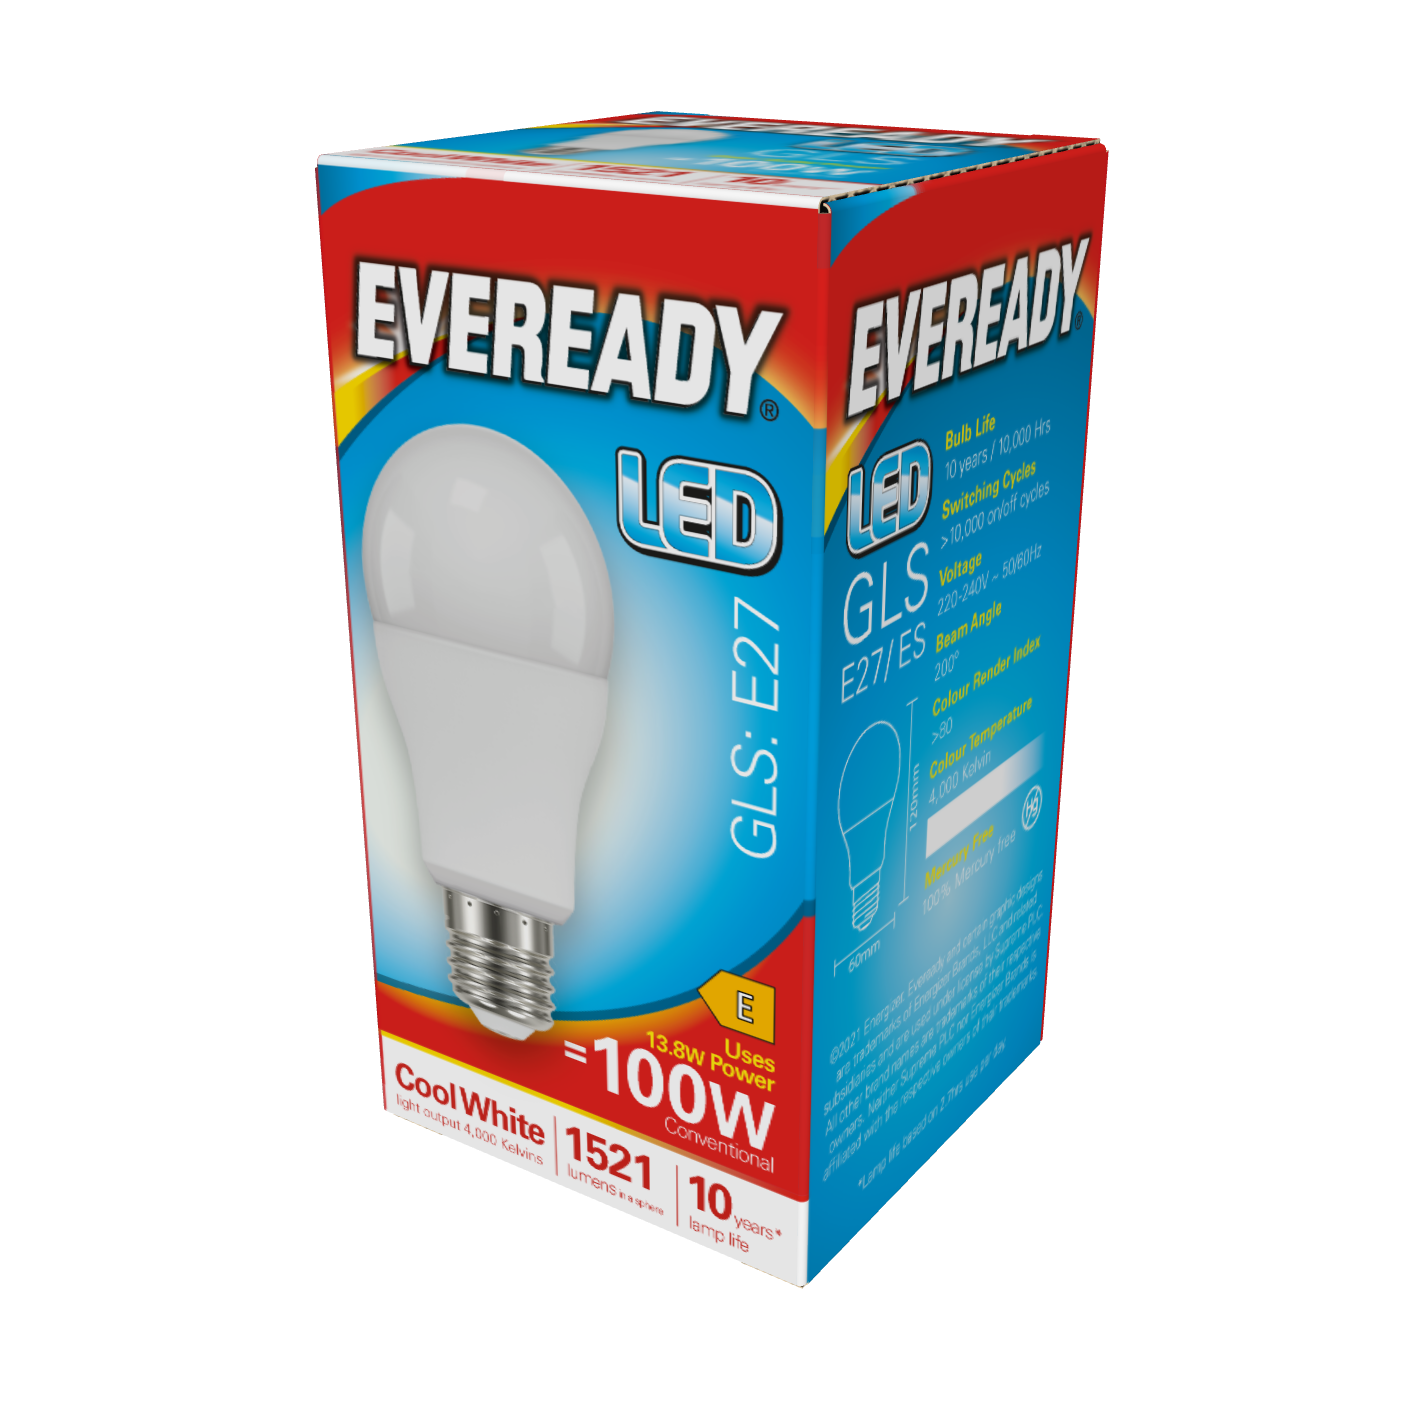 Eveready LED GLS E27 (ES) 1,521lm 13.8W 4,000K (Cool White), Box of 1